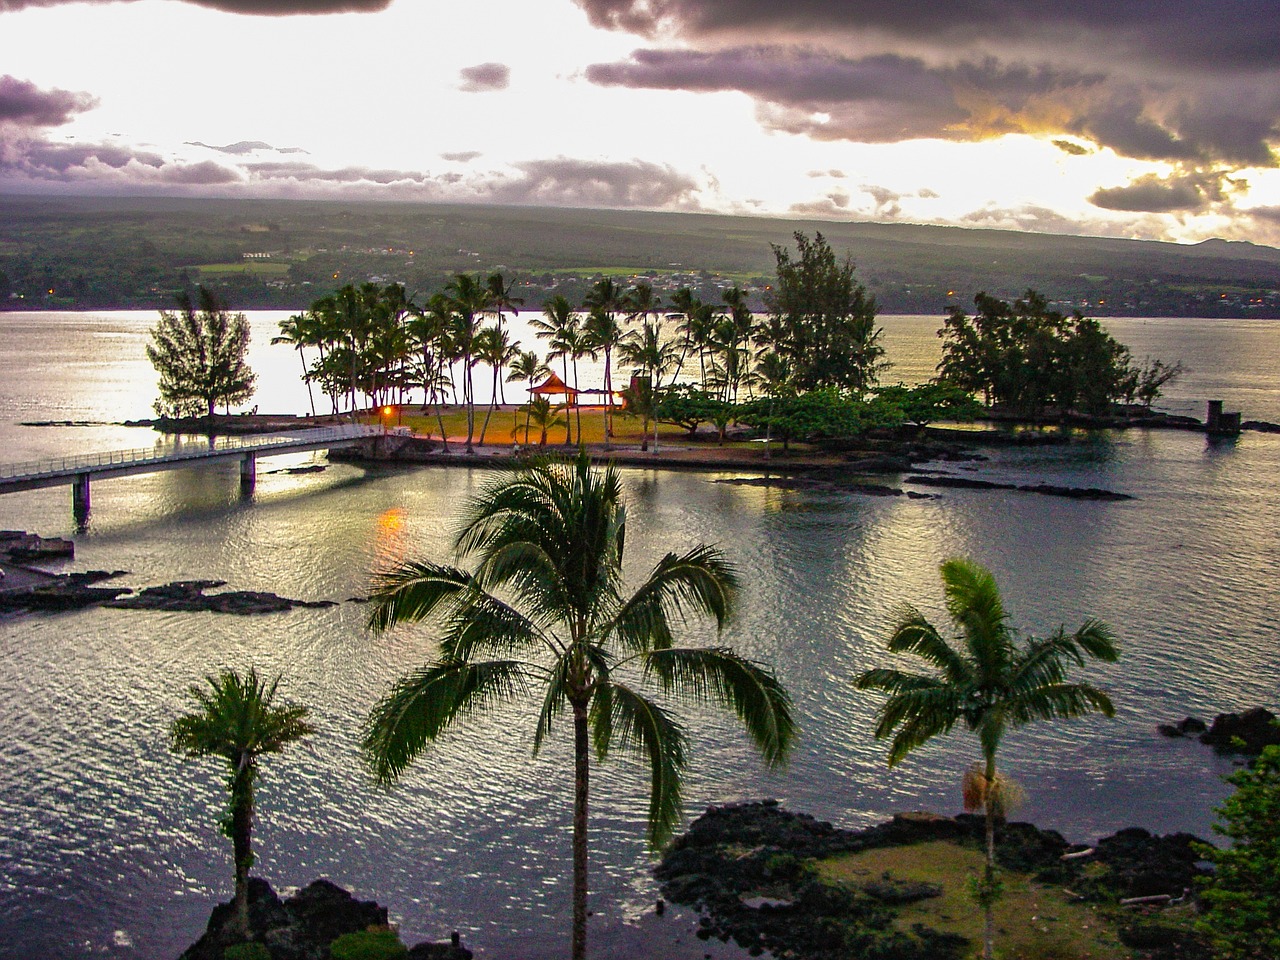 4-Day Adventure in Hilo, Hawaii